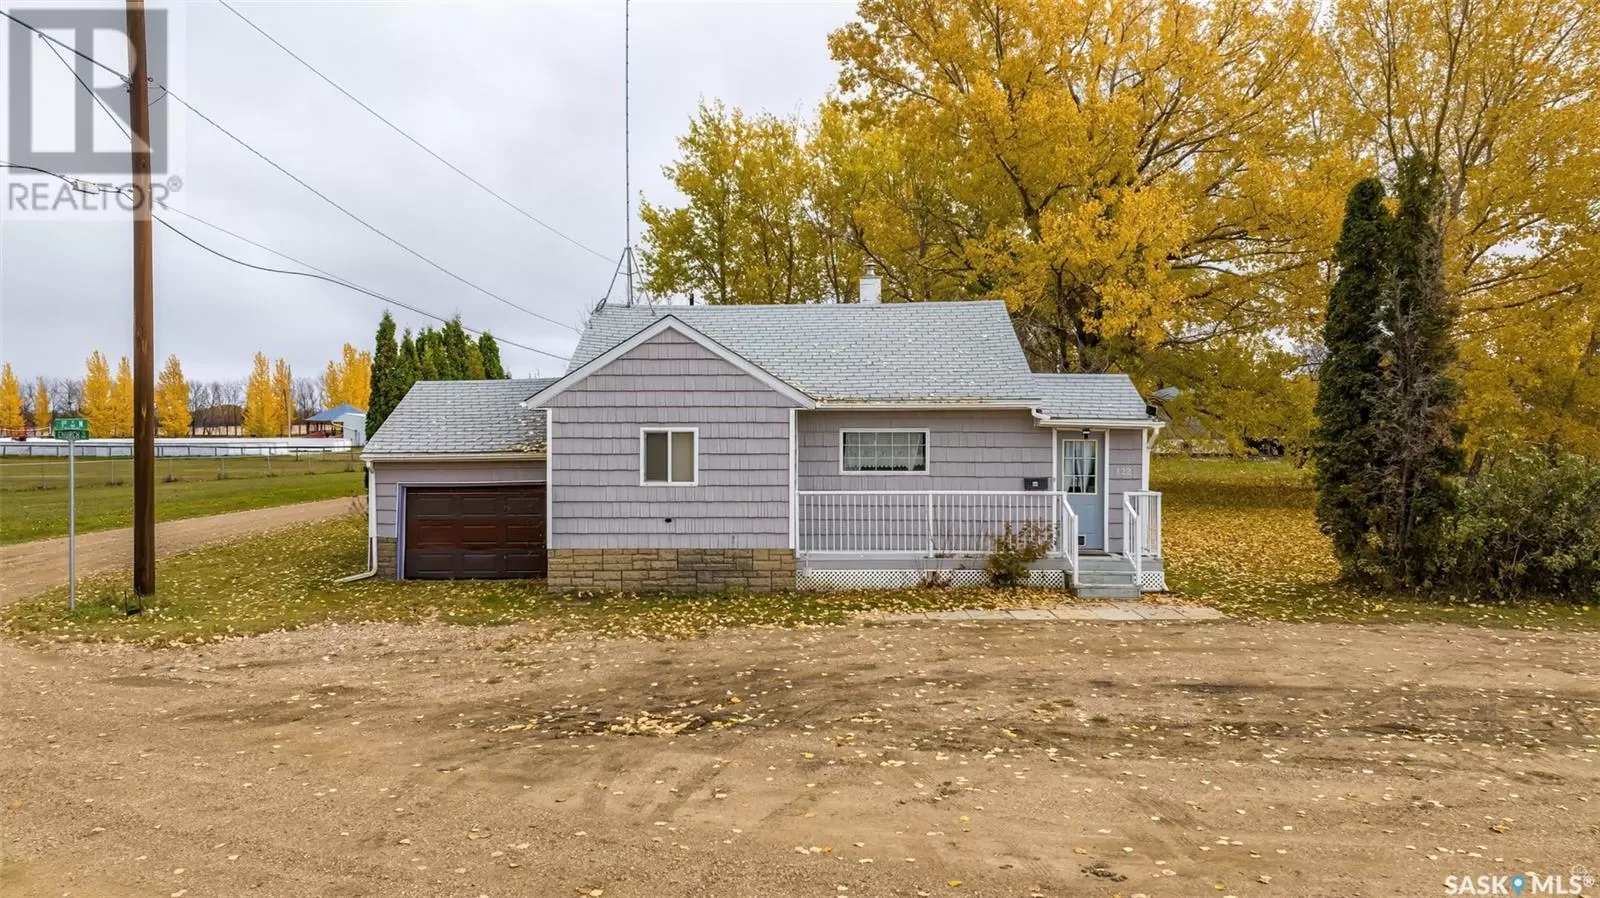 House for rent: 122 Church Street, St. Isidore De Bellevue, Saskatchewan S0K 3Y0